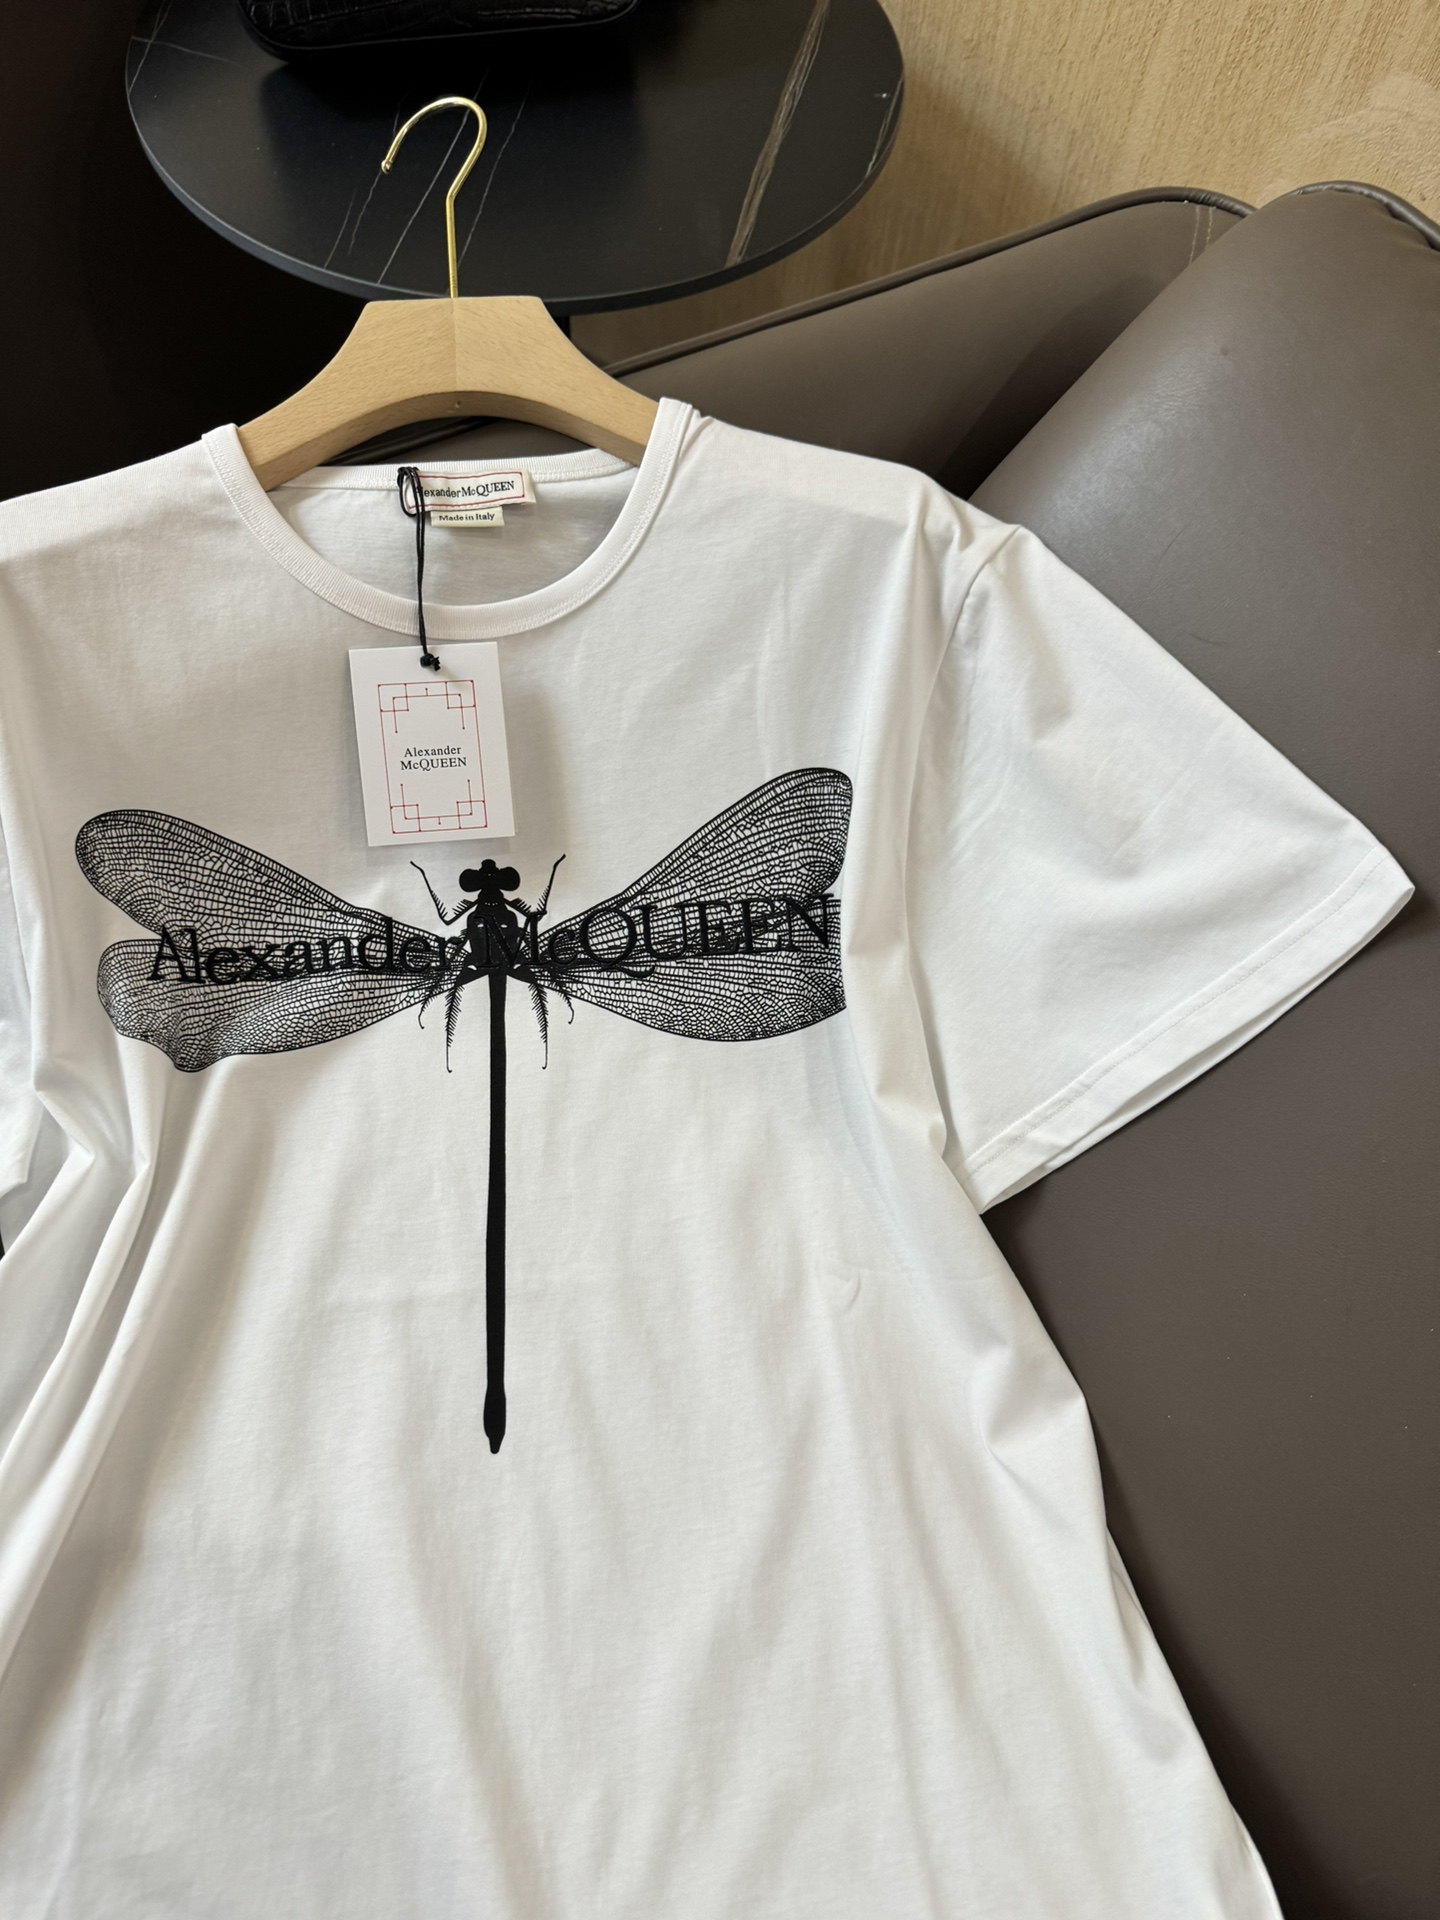 QG24049#新款T恤MQ麦昆/alexanderMcqueen蜻蜓印花短款宽松T恤白色SML